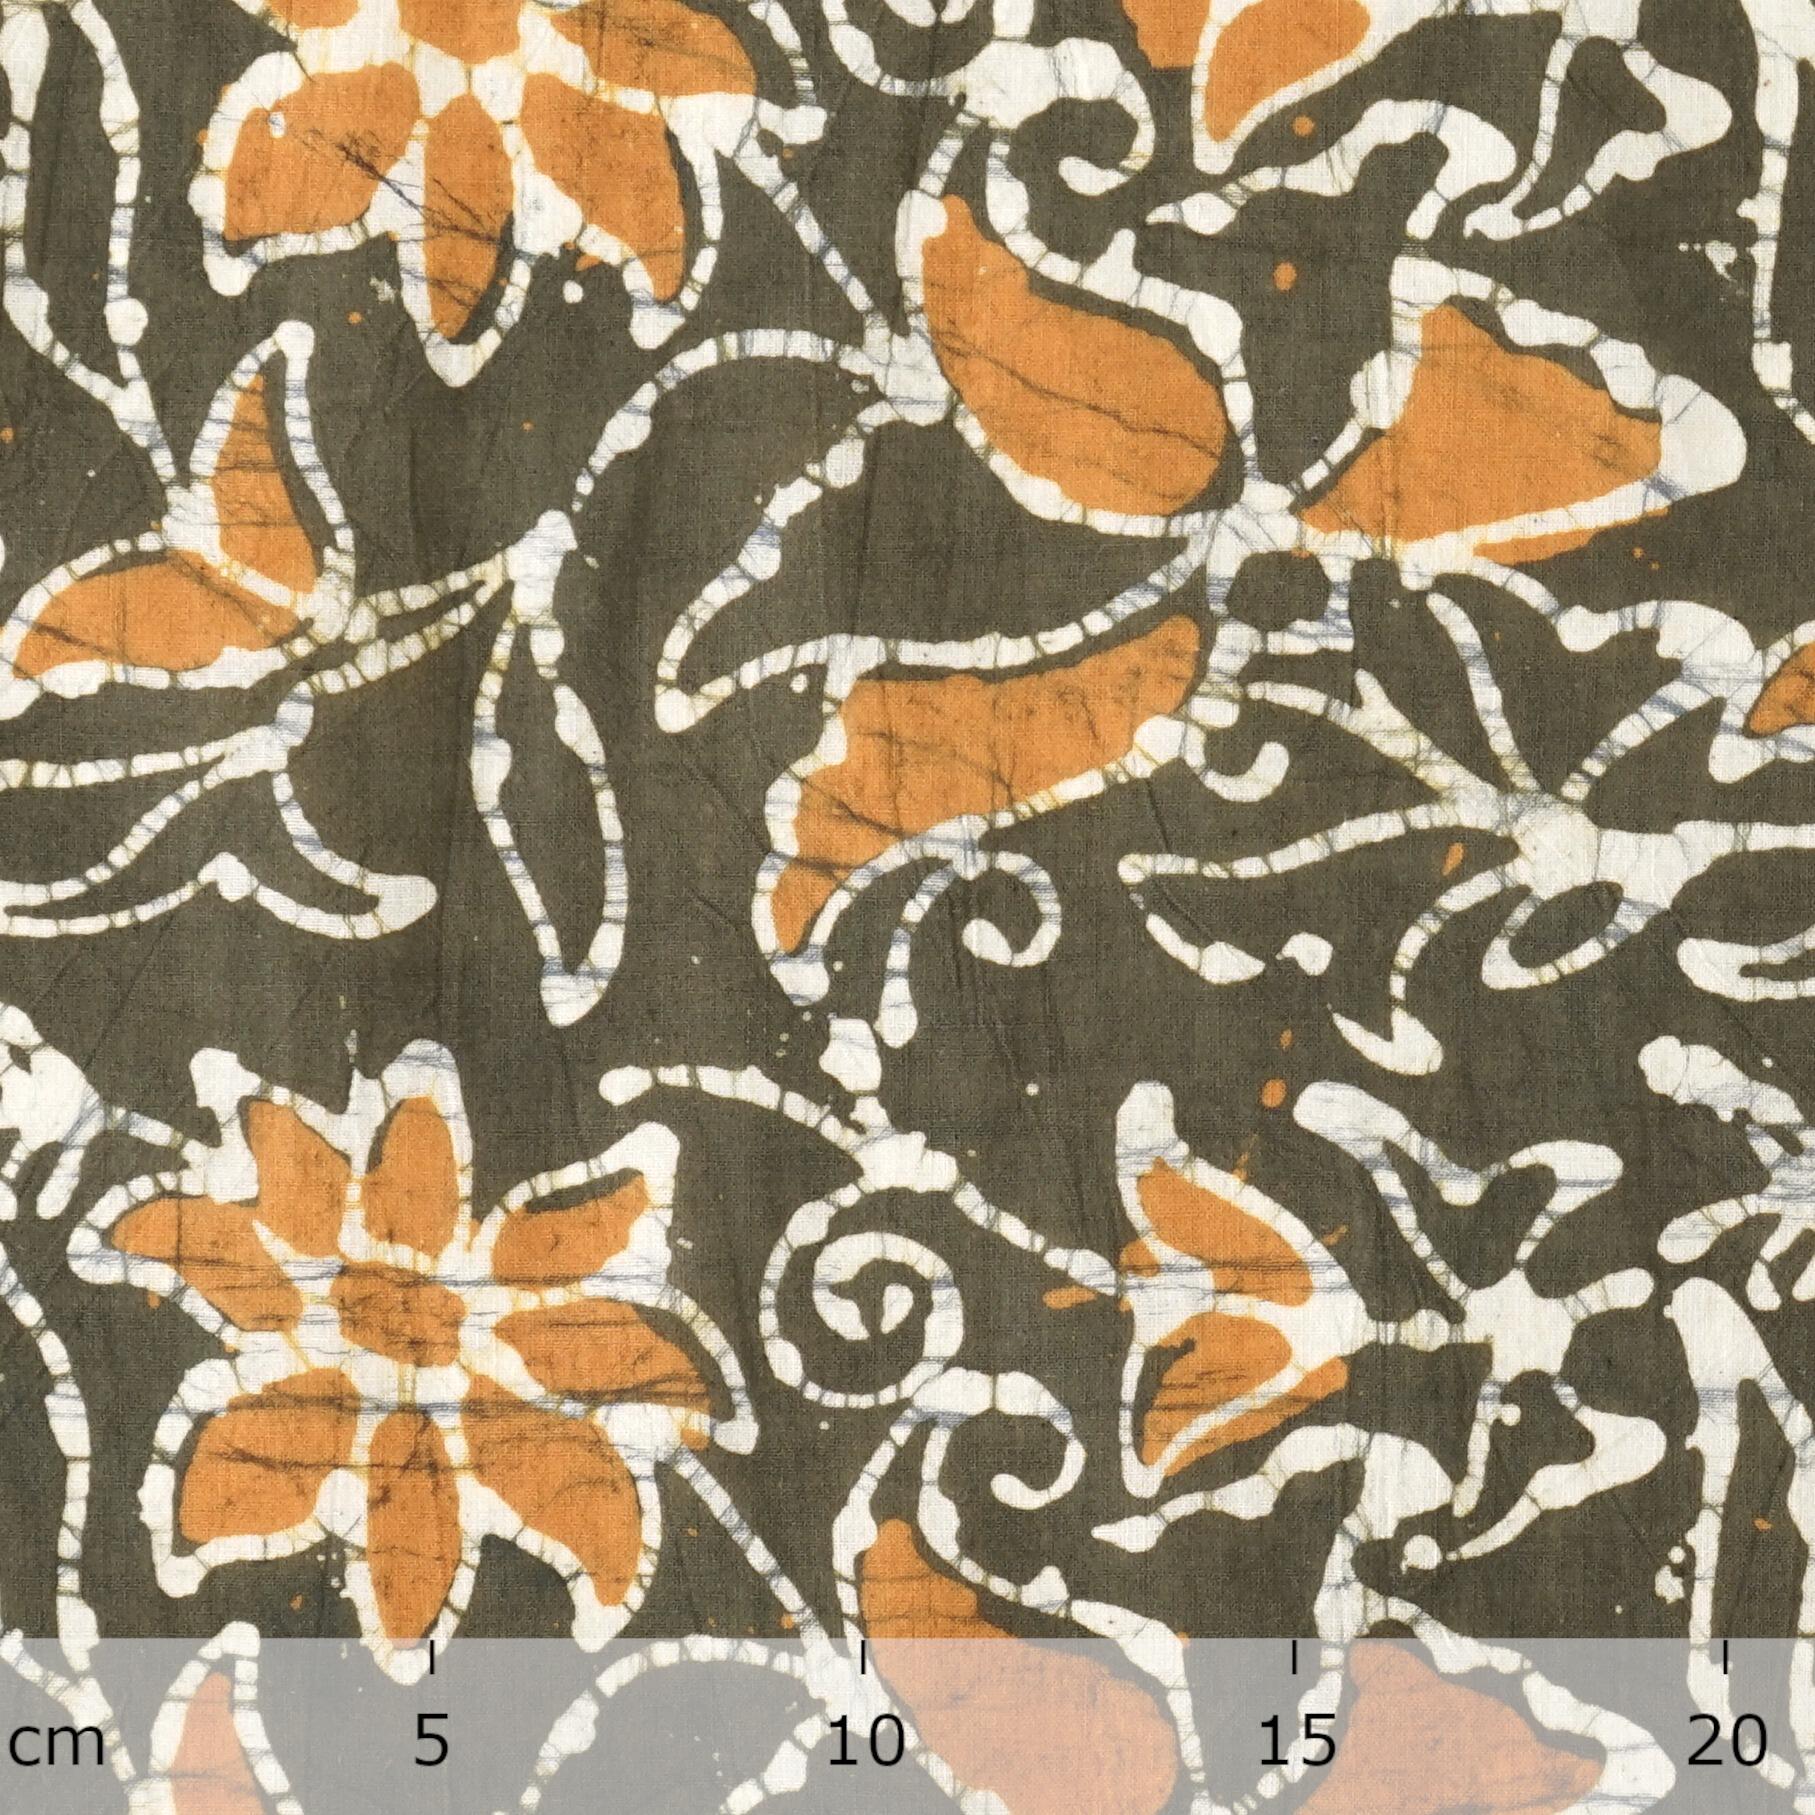 100% Block-Printed Batik Cotton Fabric From India - Clematis Motif - Ruler